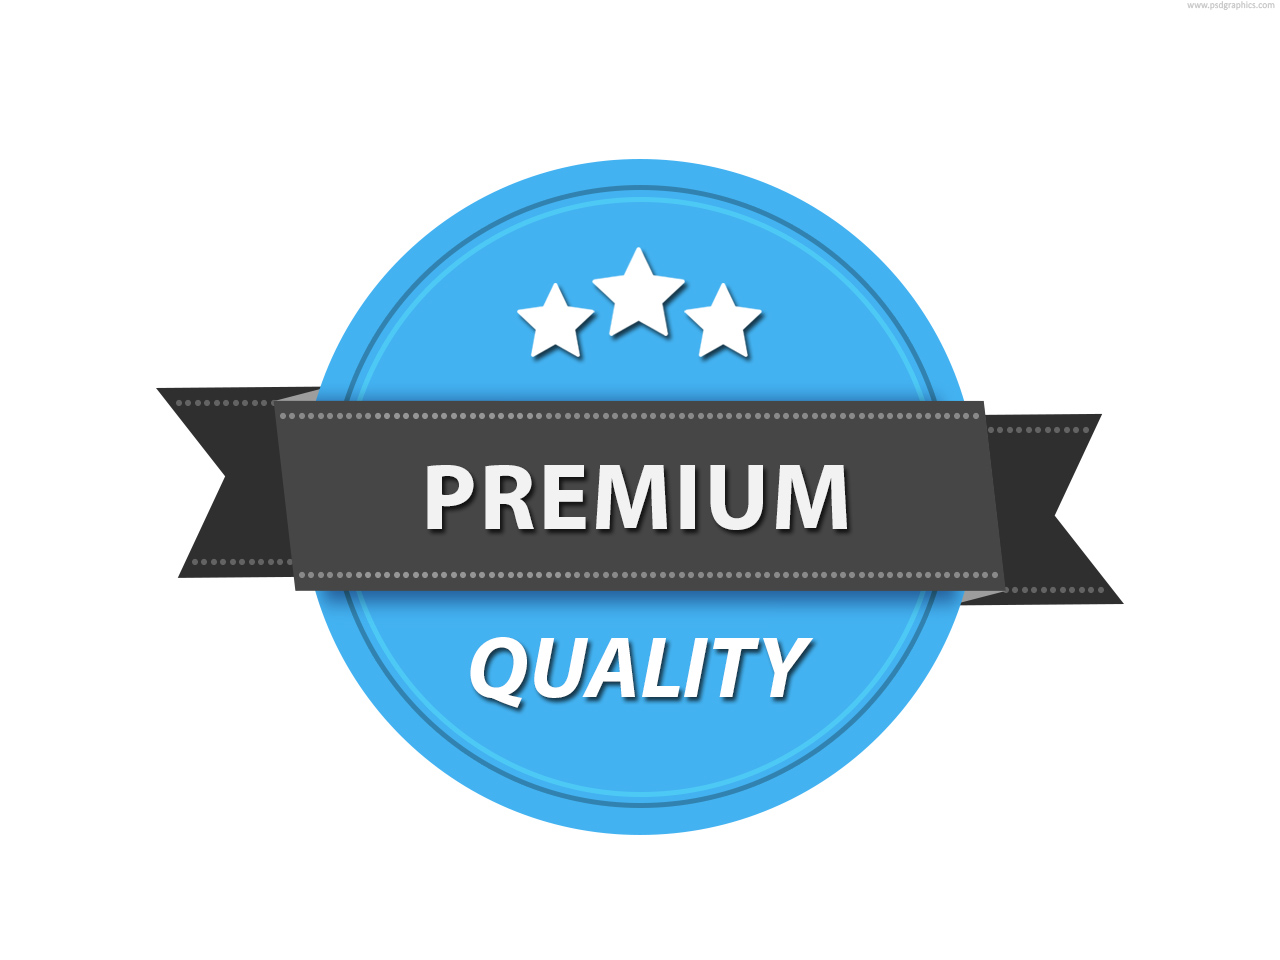 Premium Quality Badge Template  Psd    Psdgraphics